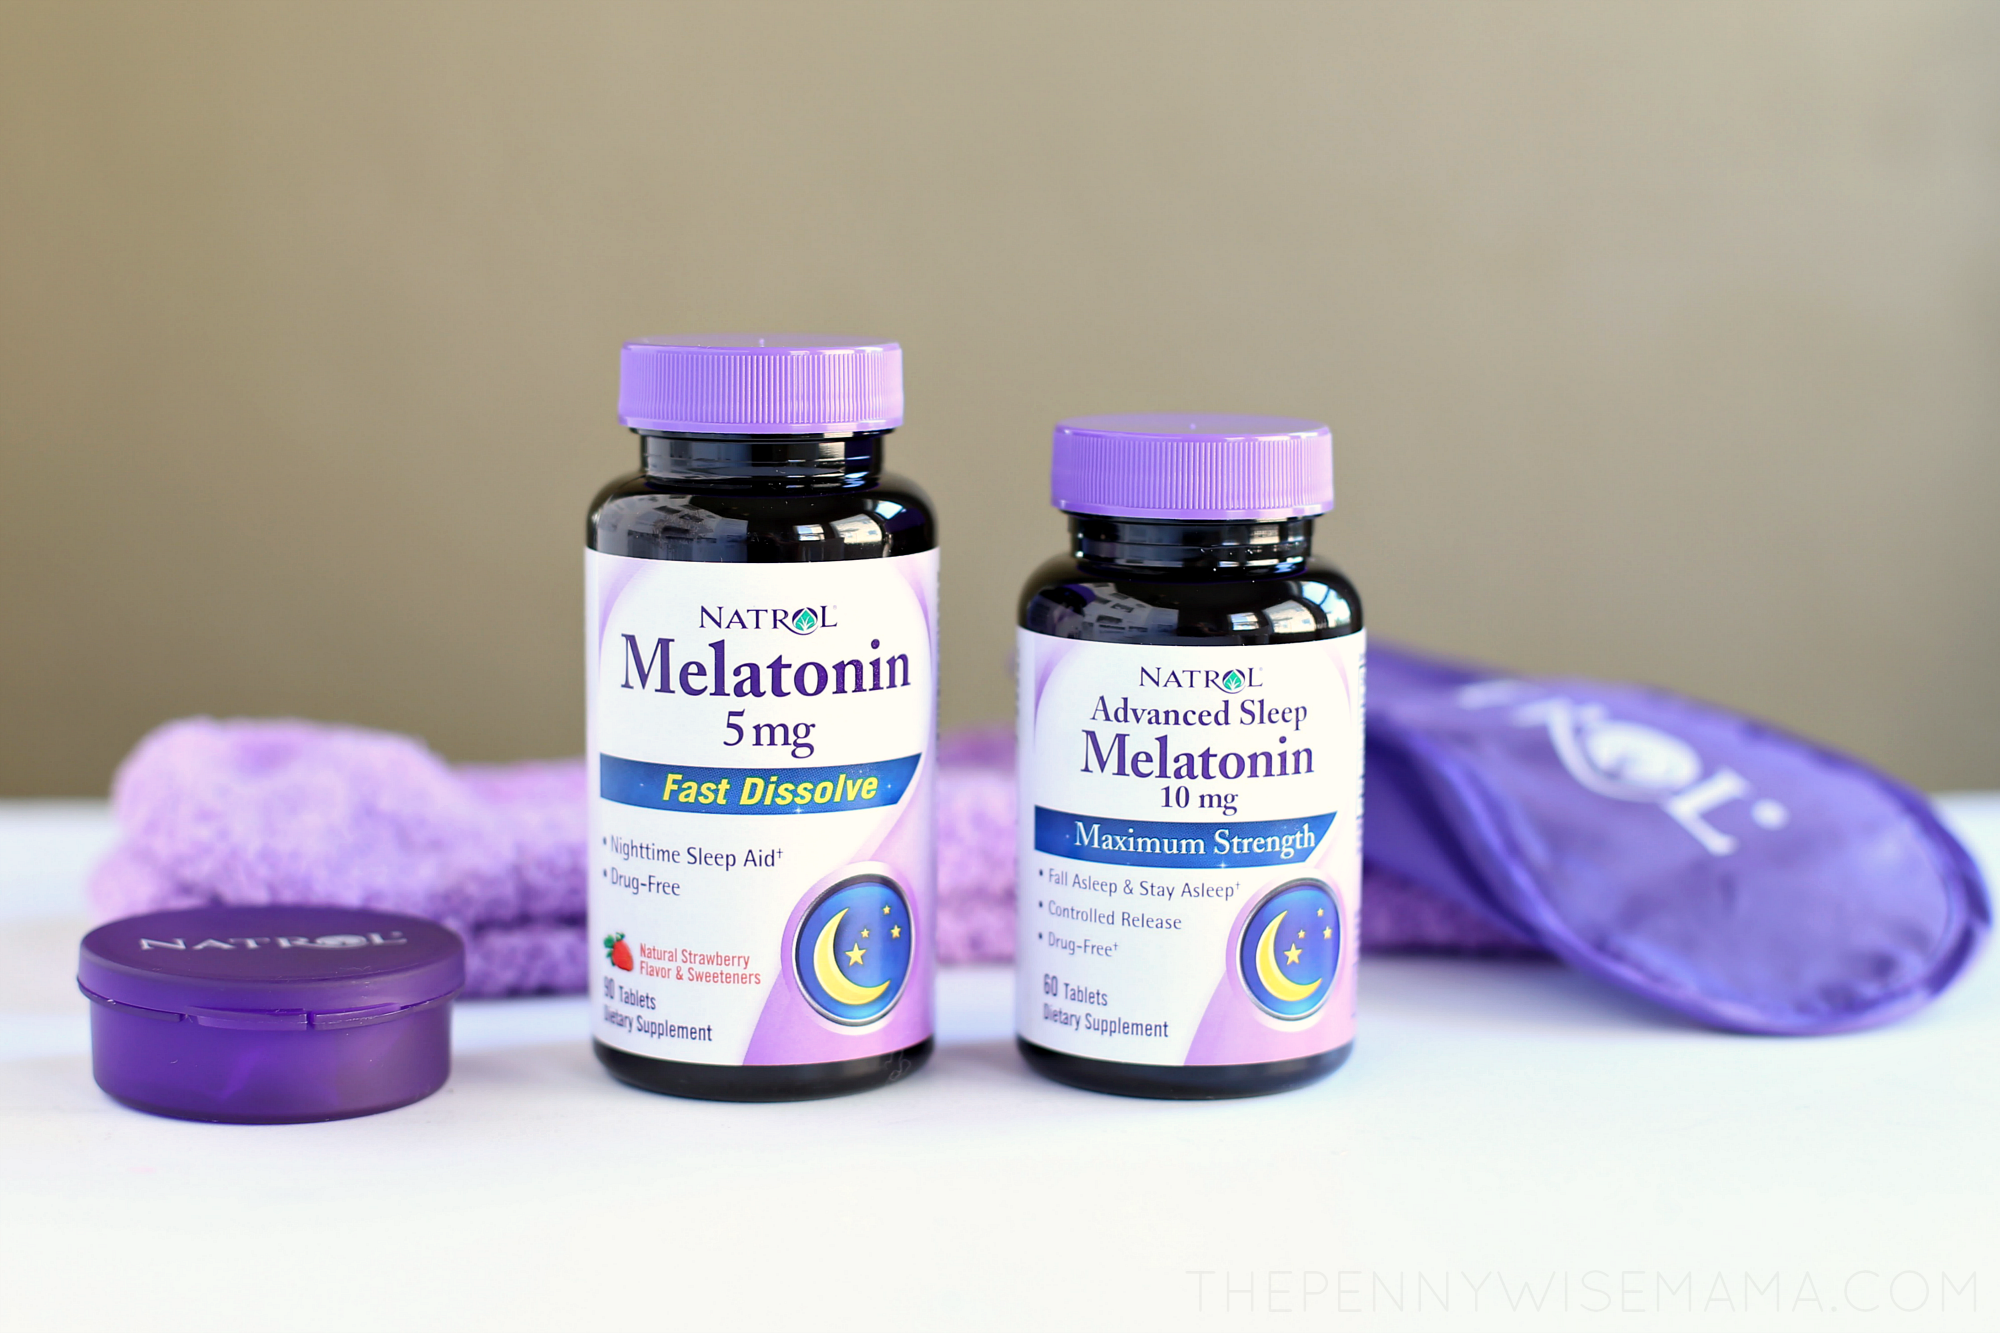 Natrol Melatonin - 100% drug-free and non-habit forming